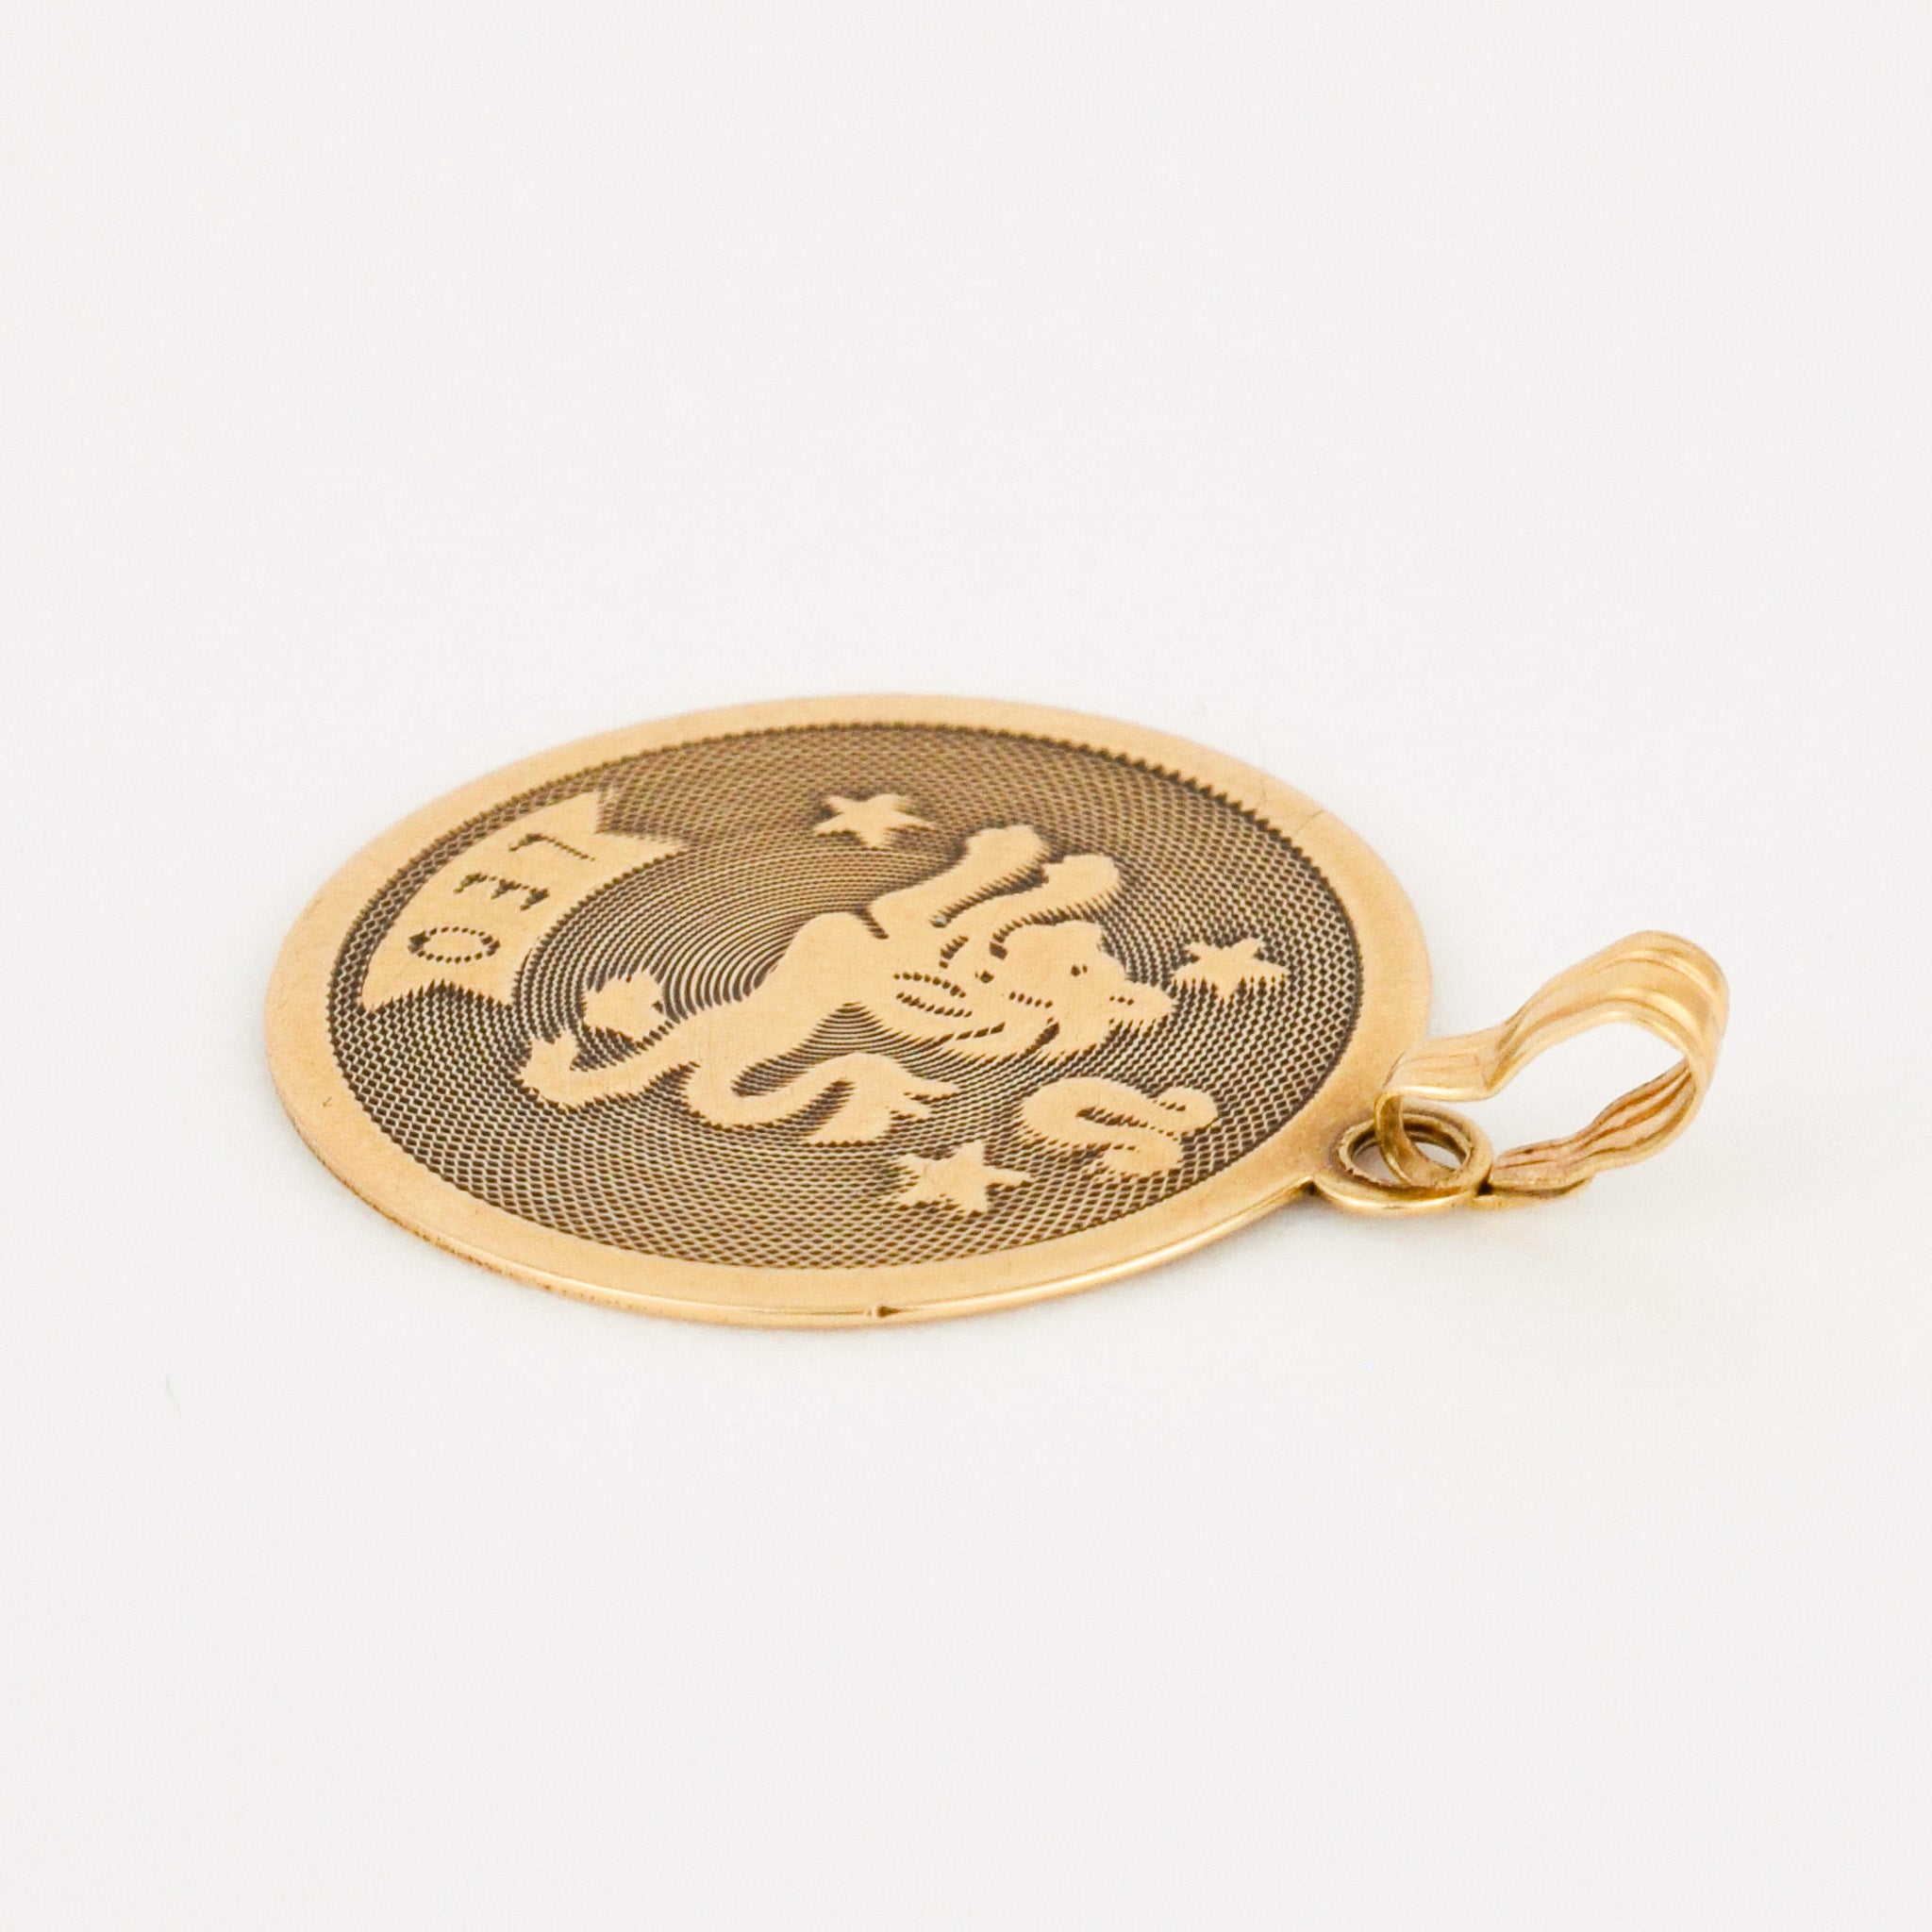 vintage leo gold charm pendant 